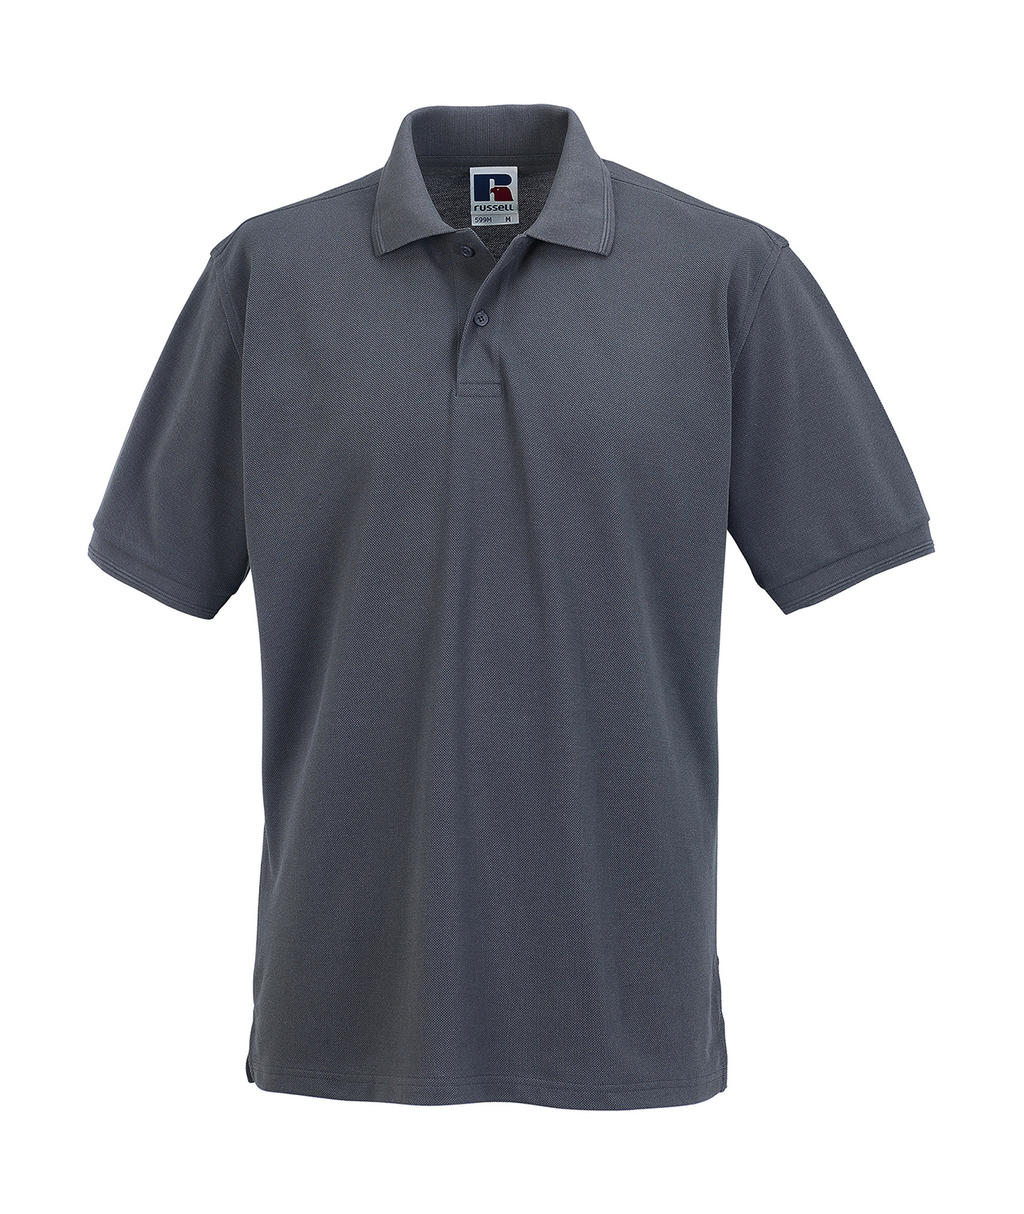 Russel Europe Herren Polo Shirt Shirt T-Shirt Polo Kurzarm Polohemd